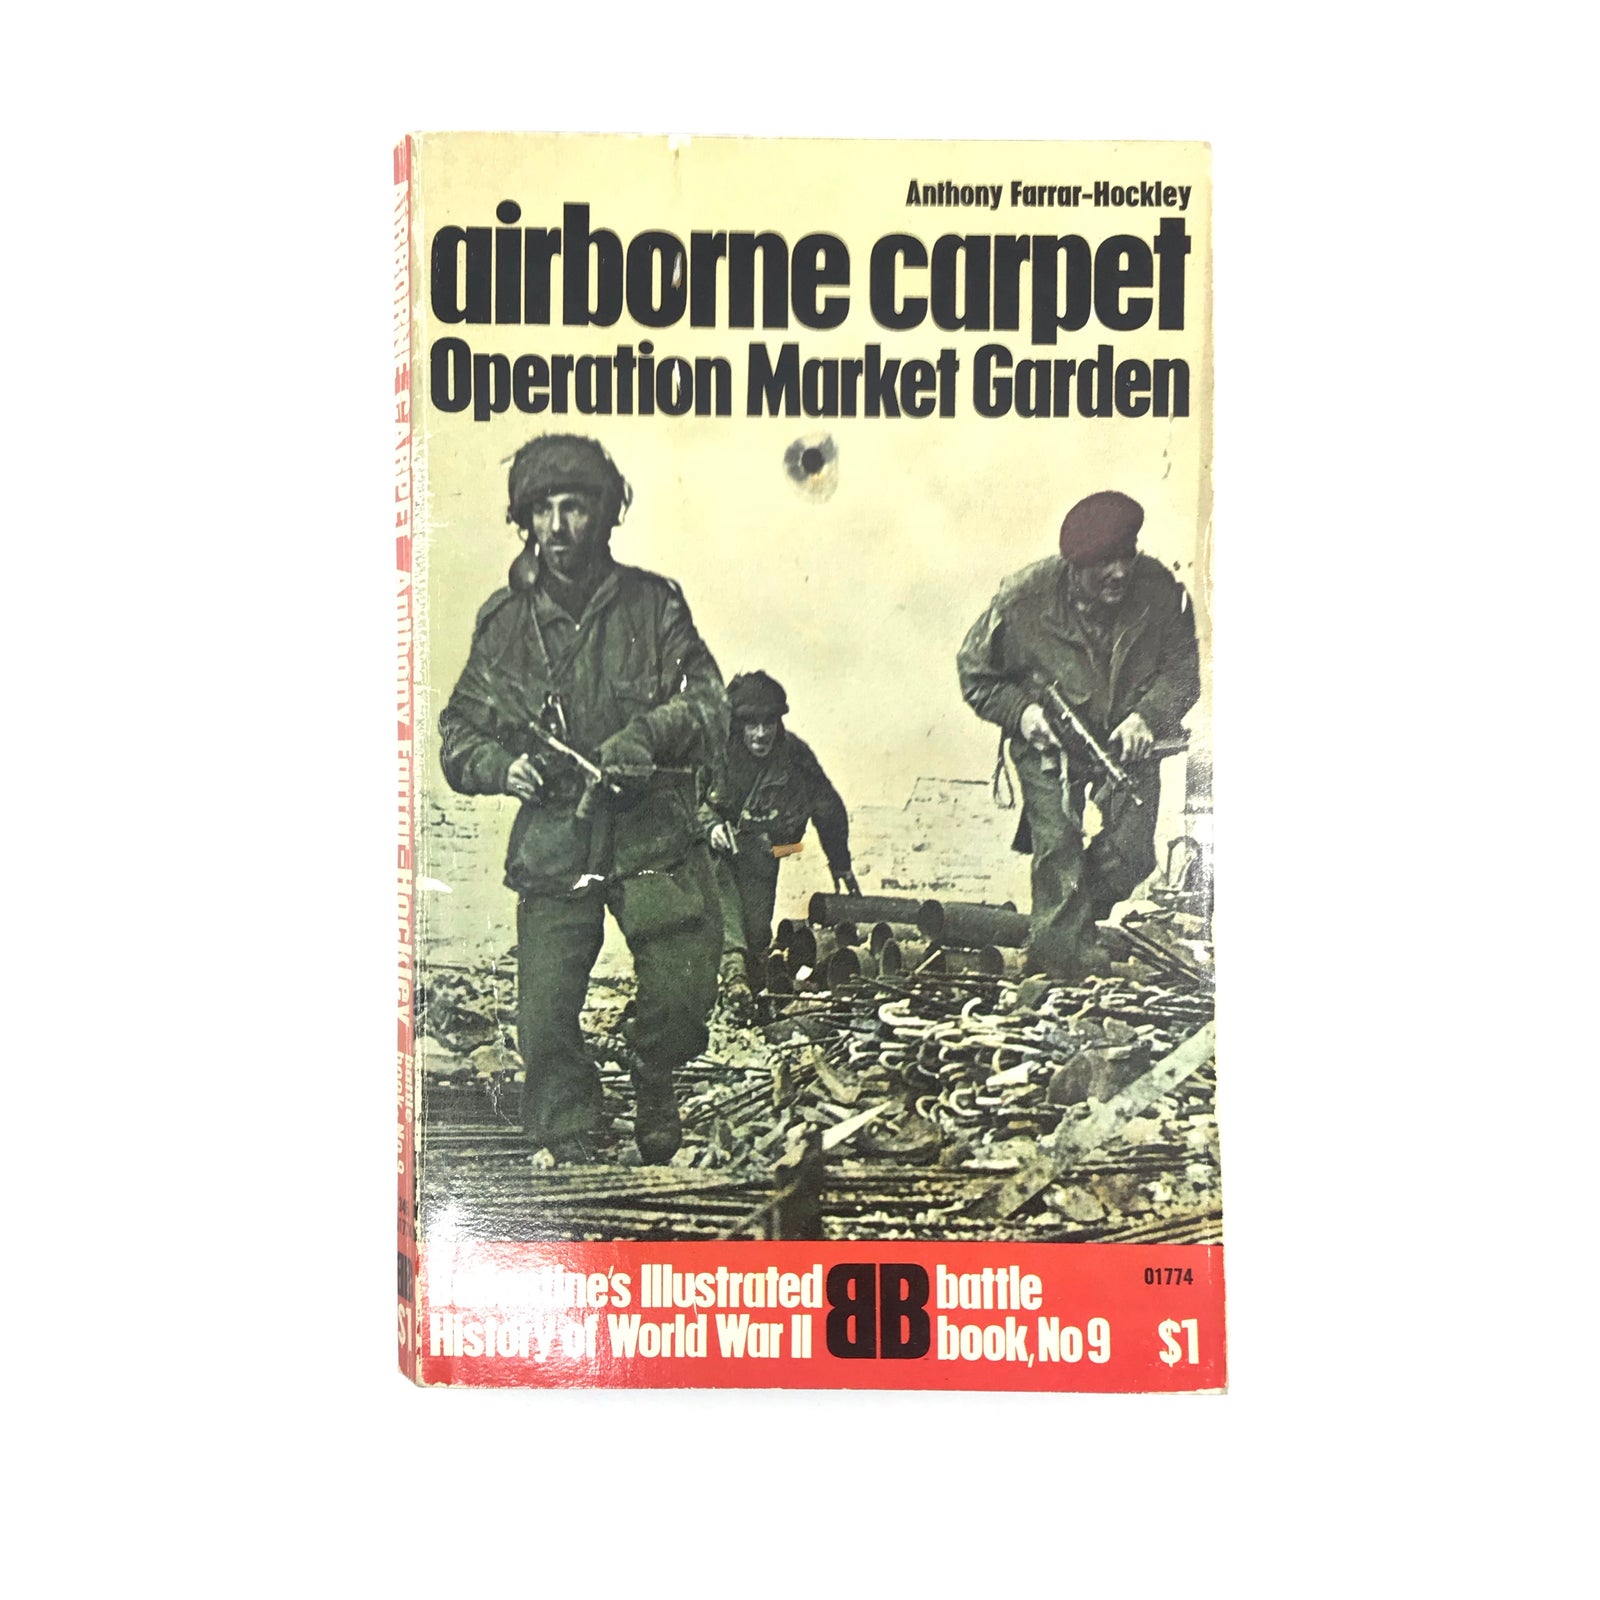 Ballantine's Illustrated History of World War II:Battle Book No9 - Airborne Carpet Operation Market Garden (Anthonly Farrar-Hockley)